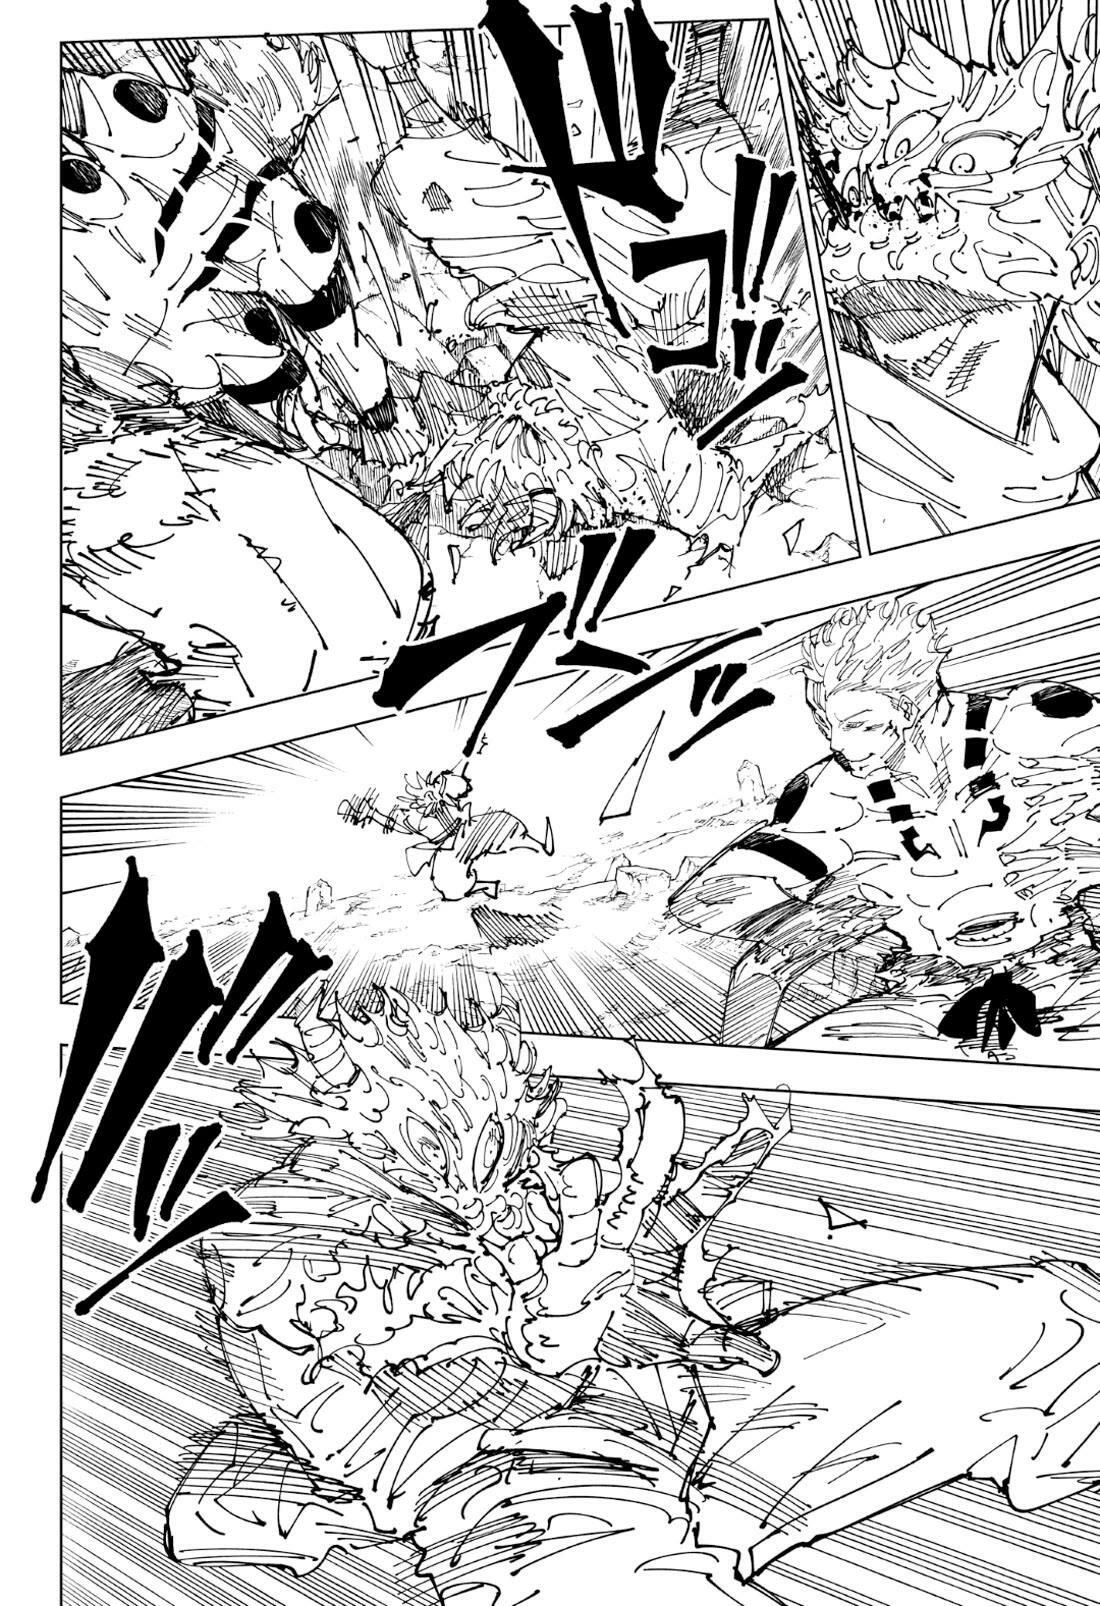 Jujutsu Kaisen Chapter 238: Chapter 238: The Decisive Battle In The Uninhabited, Demon-Infested Shinjuku ⑮ page 12 - Mangakakalot